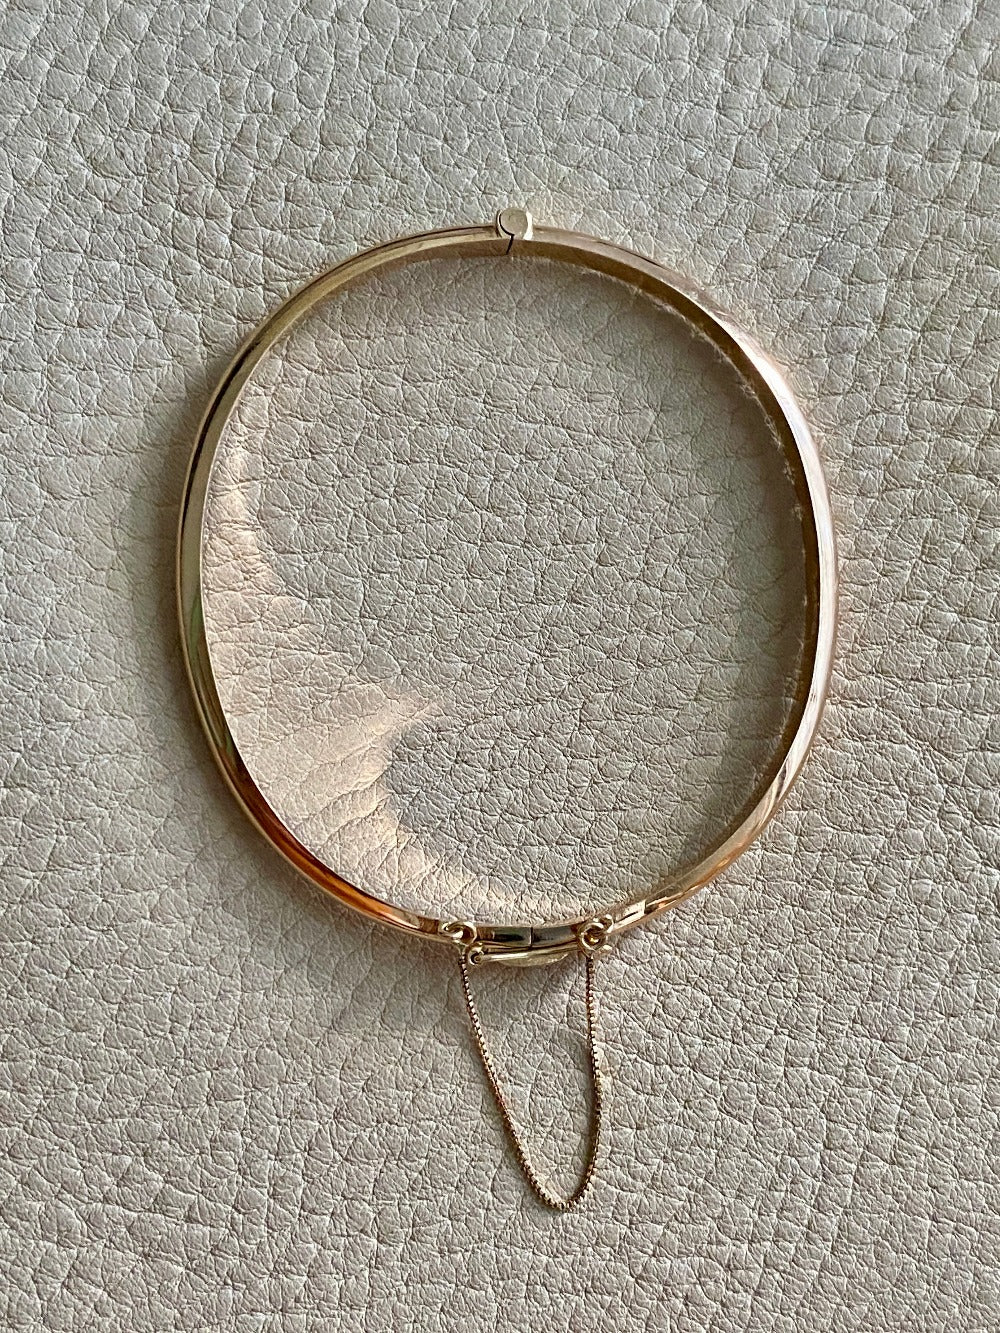 Immaculate! 1994 Finnish vintage 14k gold hinged bangle bracelet